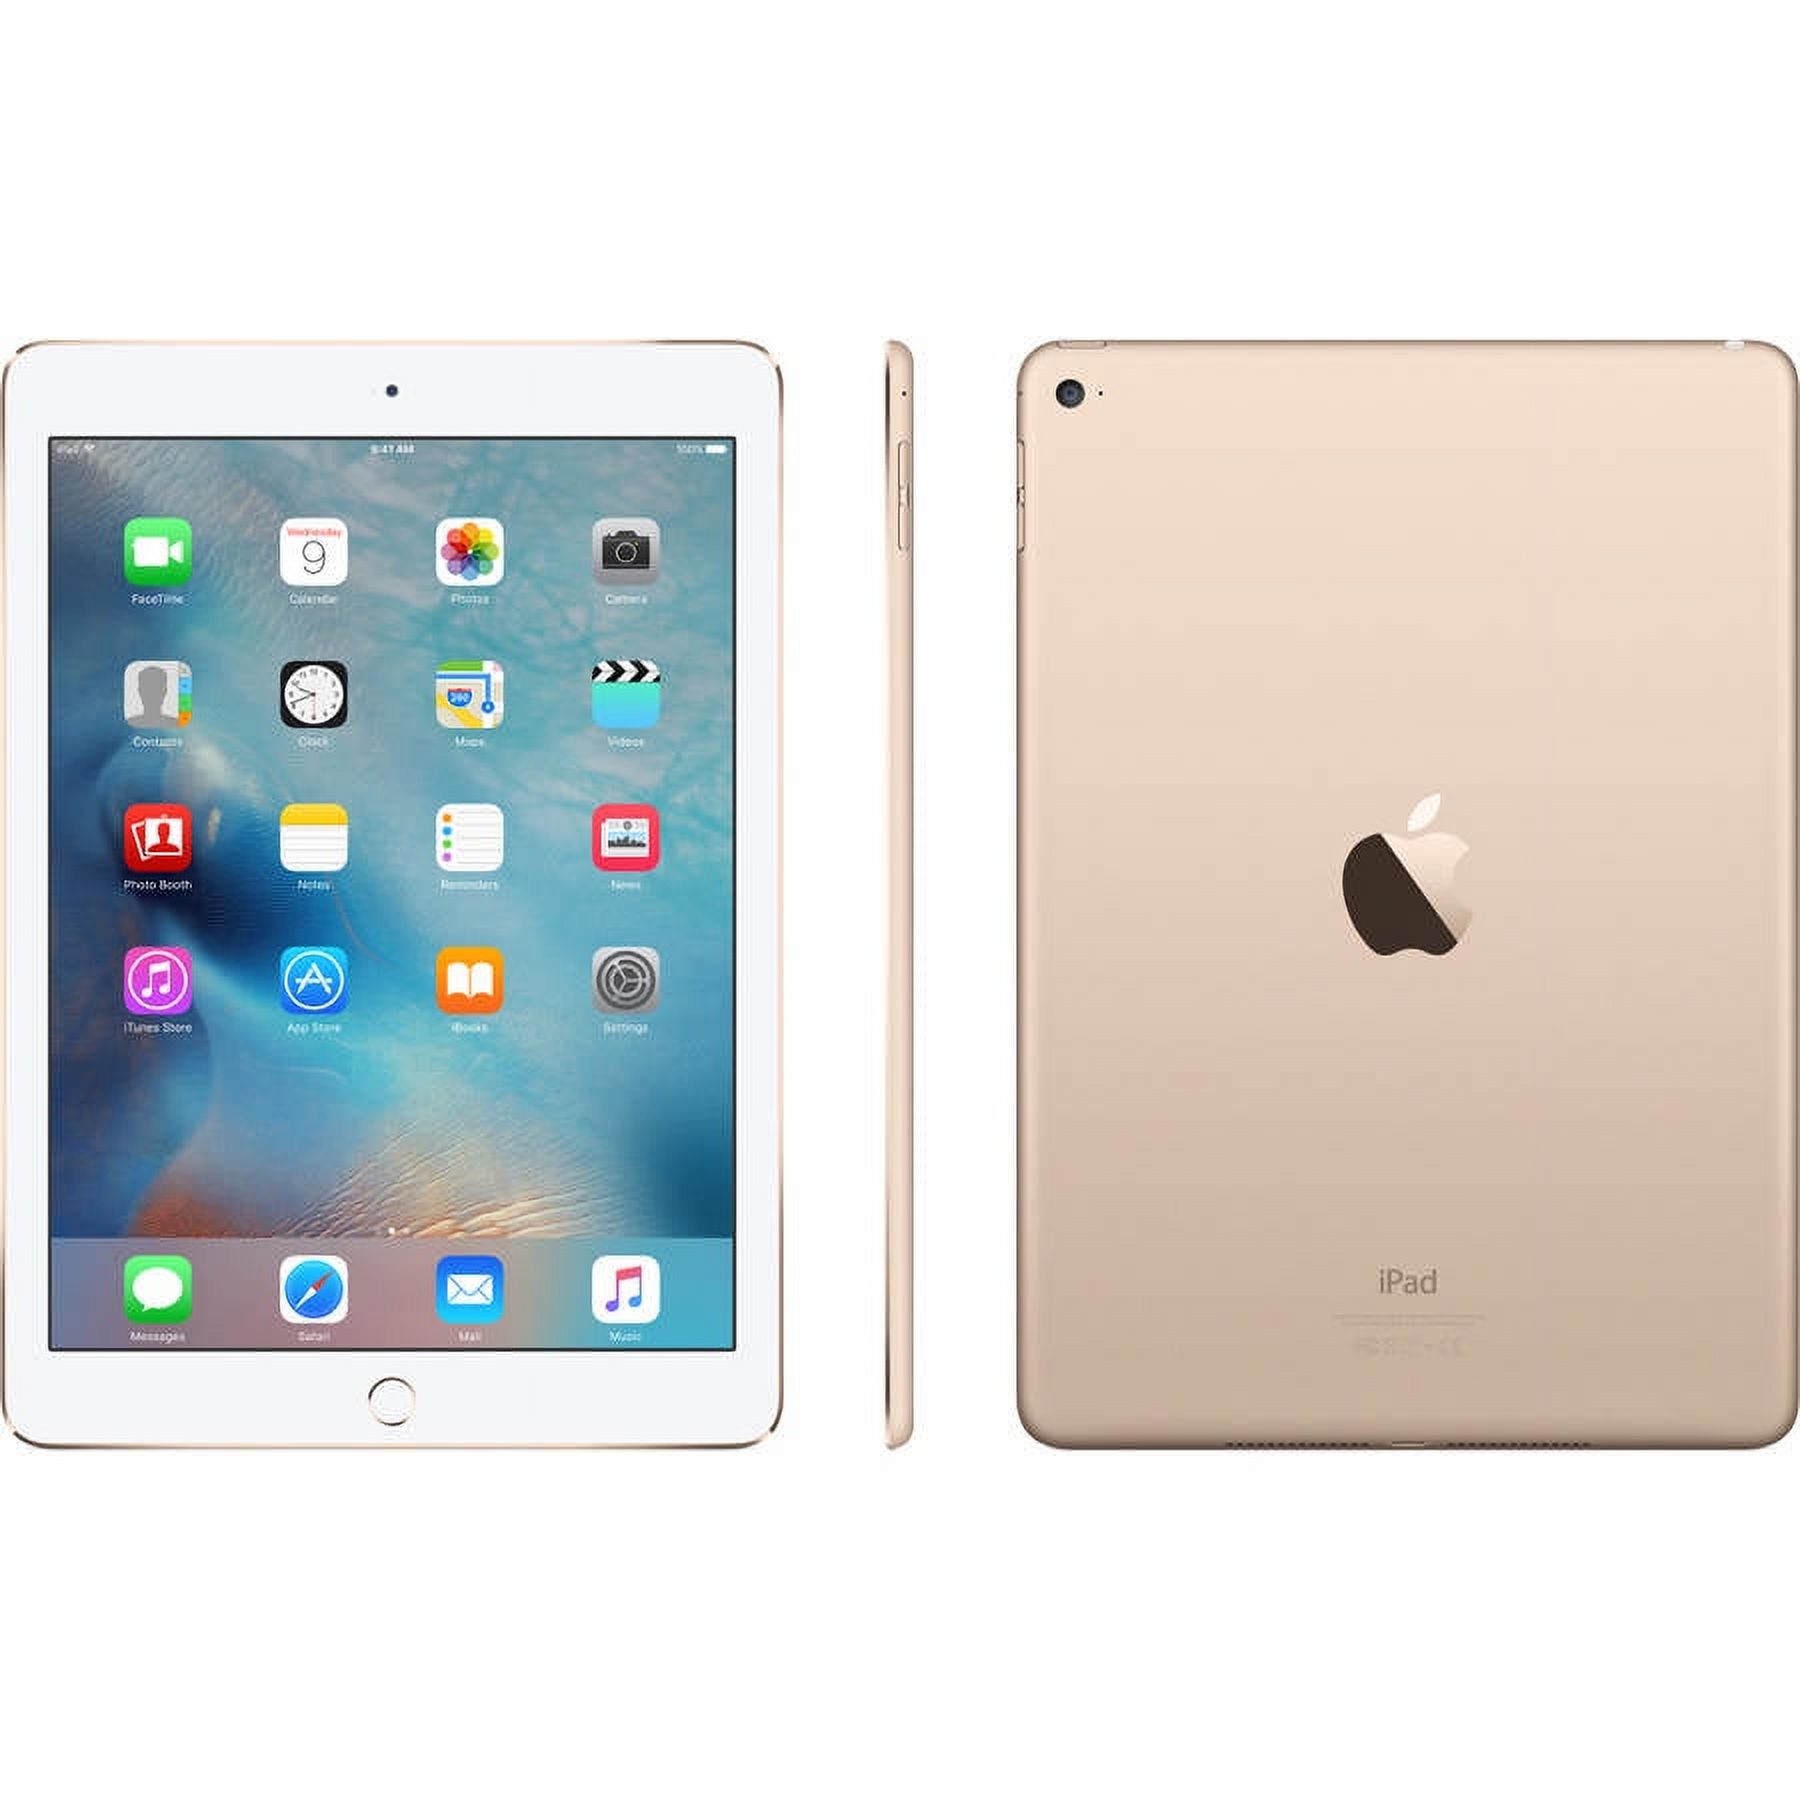 Apple iPad Air 2 Gold 16GB - image 3 of 3